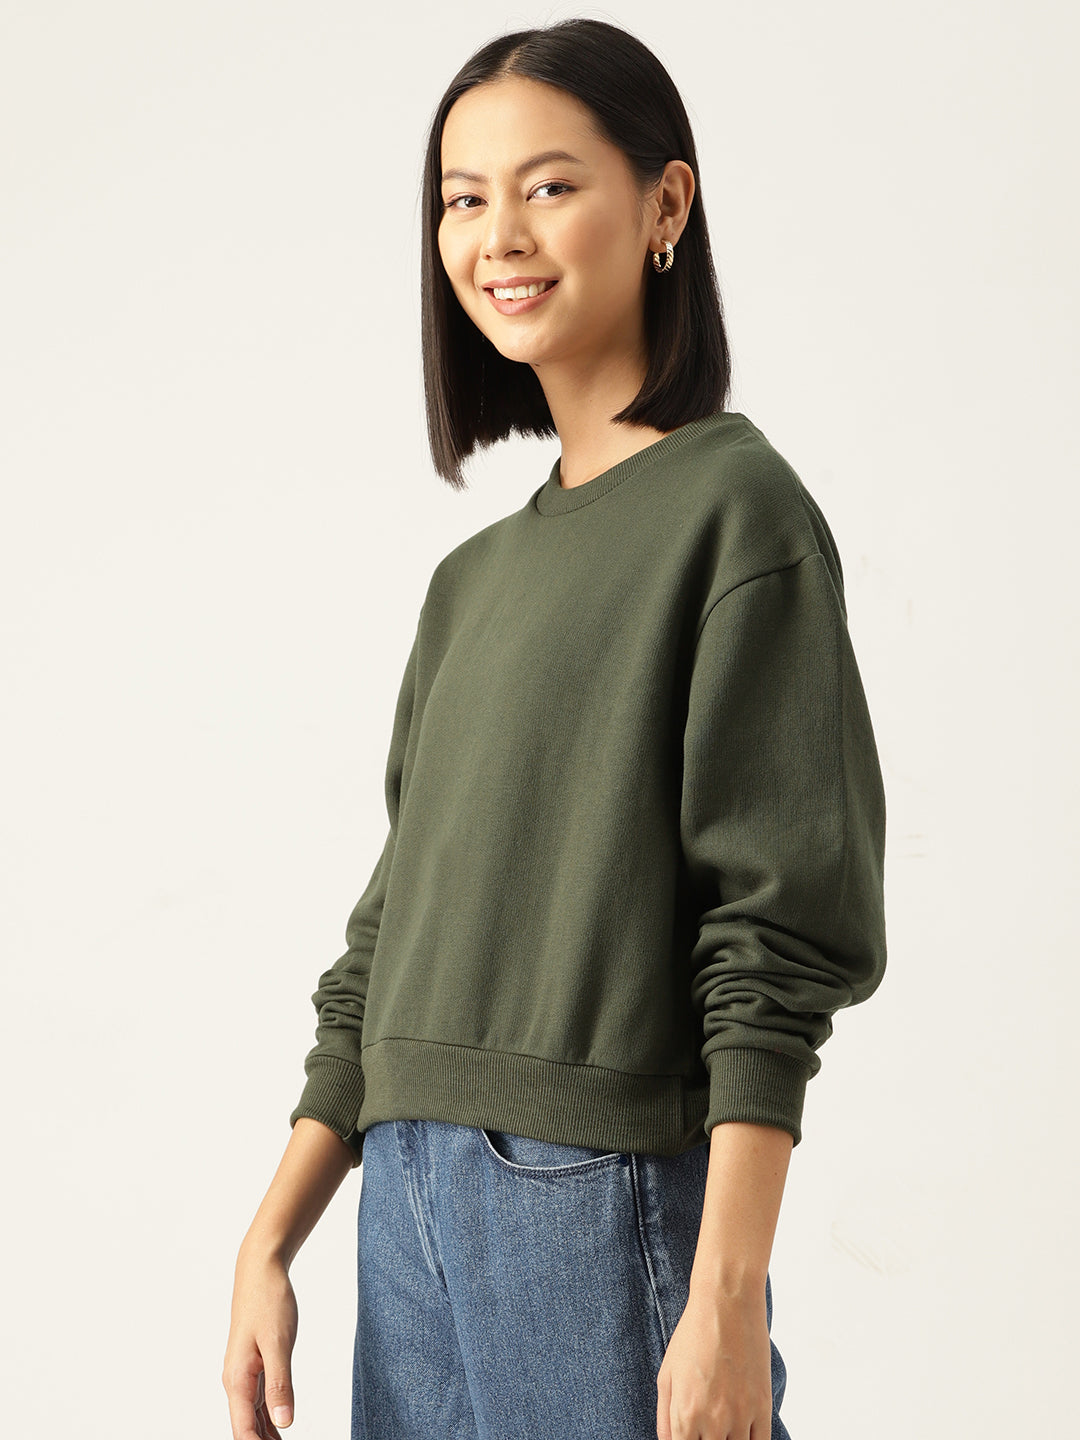 Solid Olive Green Sweatshirt